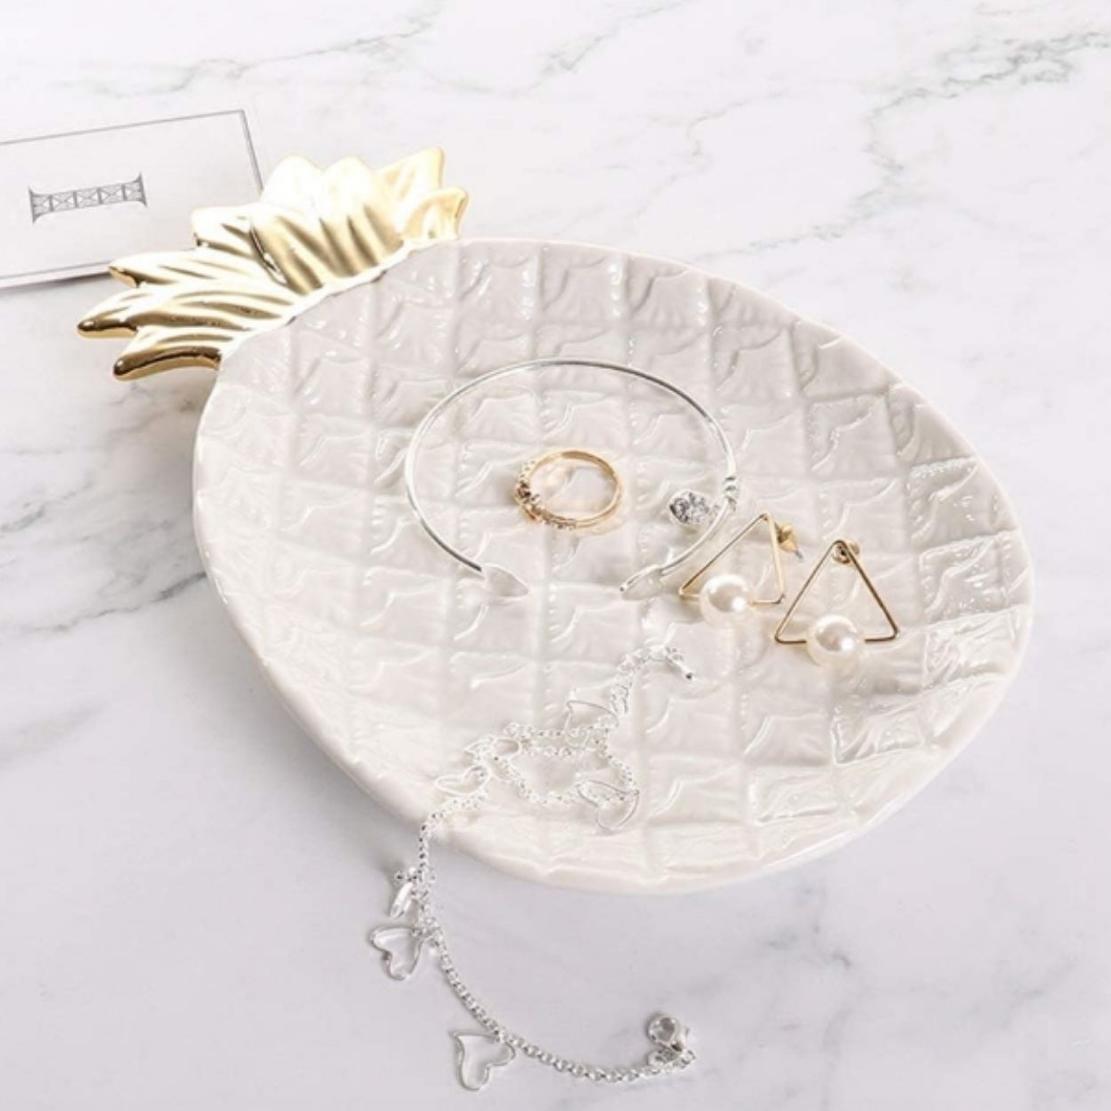 White & gold ceramic pineapple jewellery tray